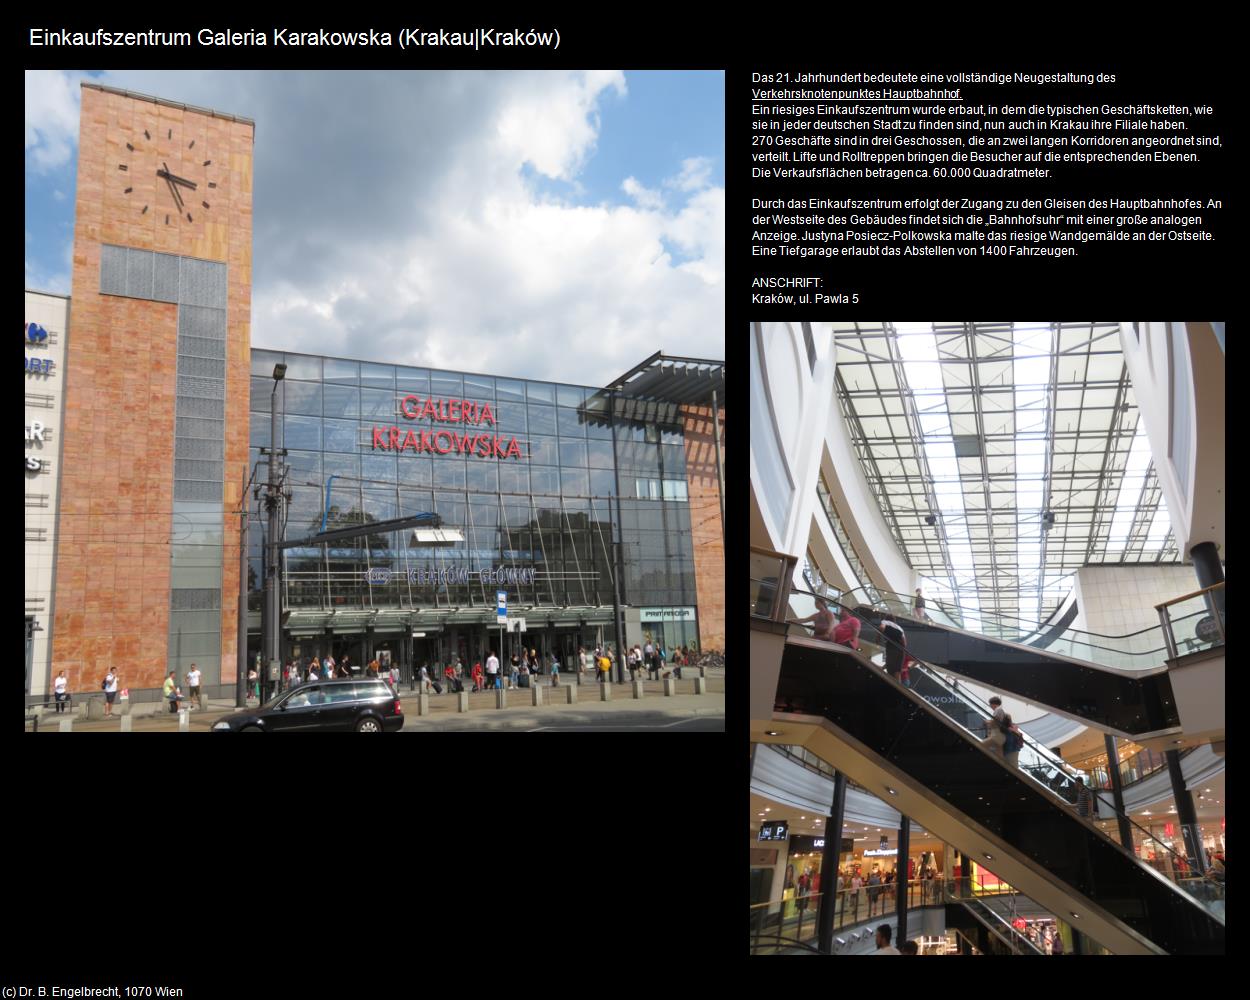 Einkaufszentrum Galeria Karakowska (Pradnik Czerwony) (Krakau|Krakow) in POLEN-Galizien(c)B.Engelbrecht